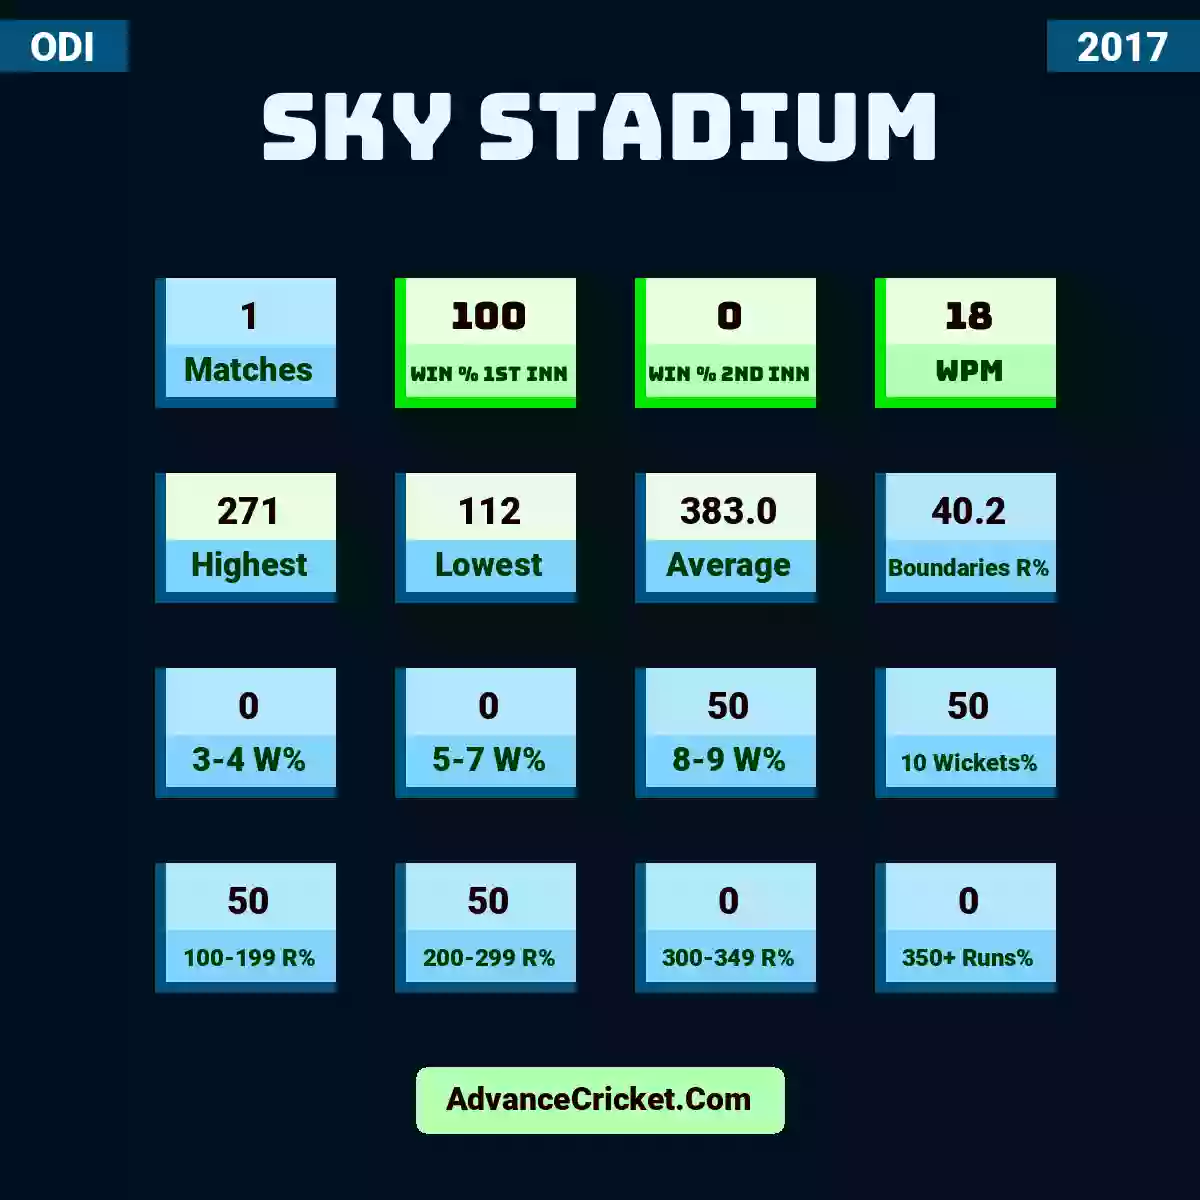 Image showing Sky Stadium with Matches: 1, Win % 1st Inn: 100, Win % 2nd Inn: 0, WPM: 18, Highest: 271, Lowest: 112, Average: 383.0, Boundaries R%: 40.2, 3-4 W%: 0, 5-7 W%: 0, 8-9 W%: 50, 10 Wickets%: 50, 100-199 R%: 50, 200-299 R%: 50, 300-349 R%: 0, 350+ Runs%: 0.